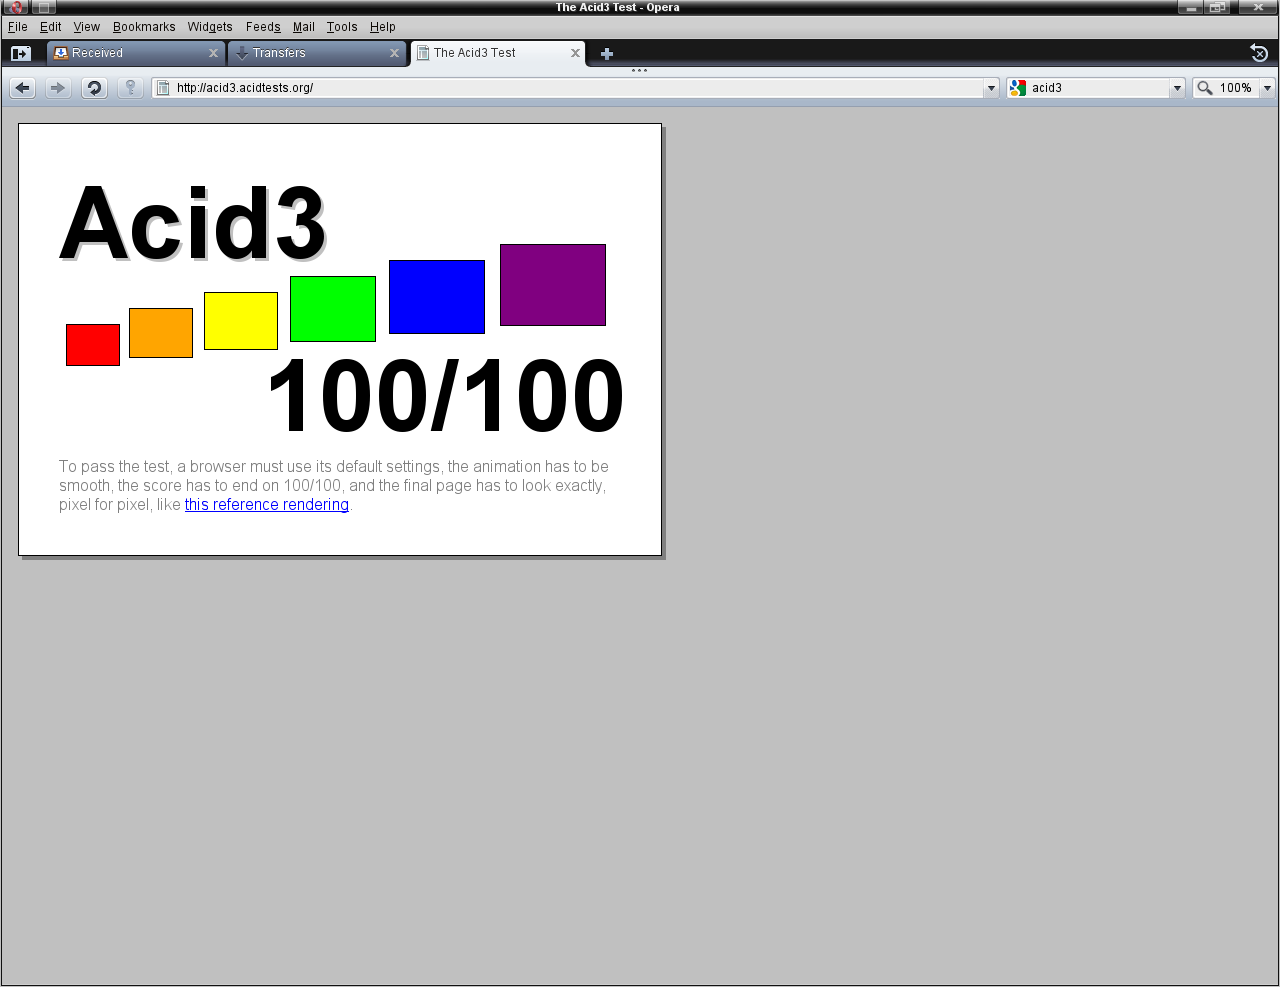 Acid3 - 100/100